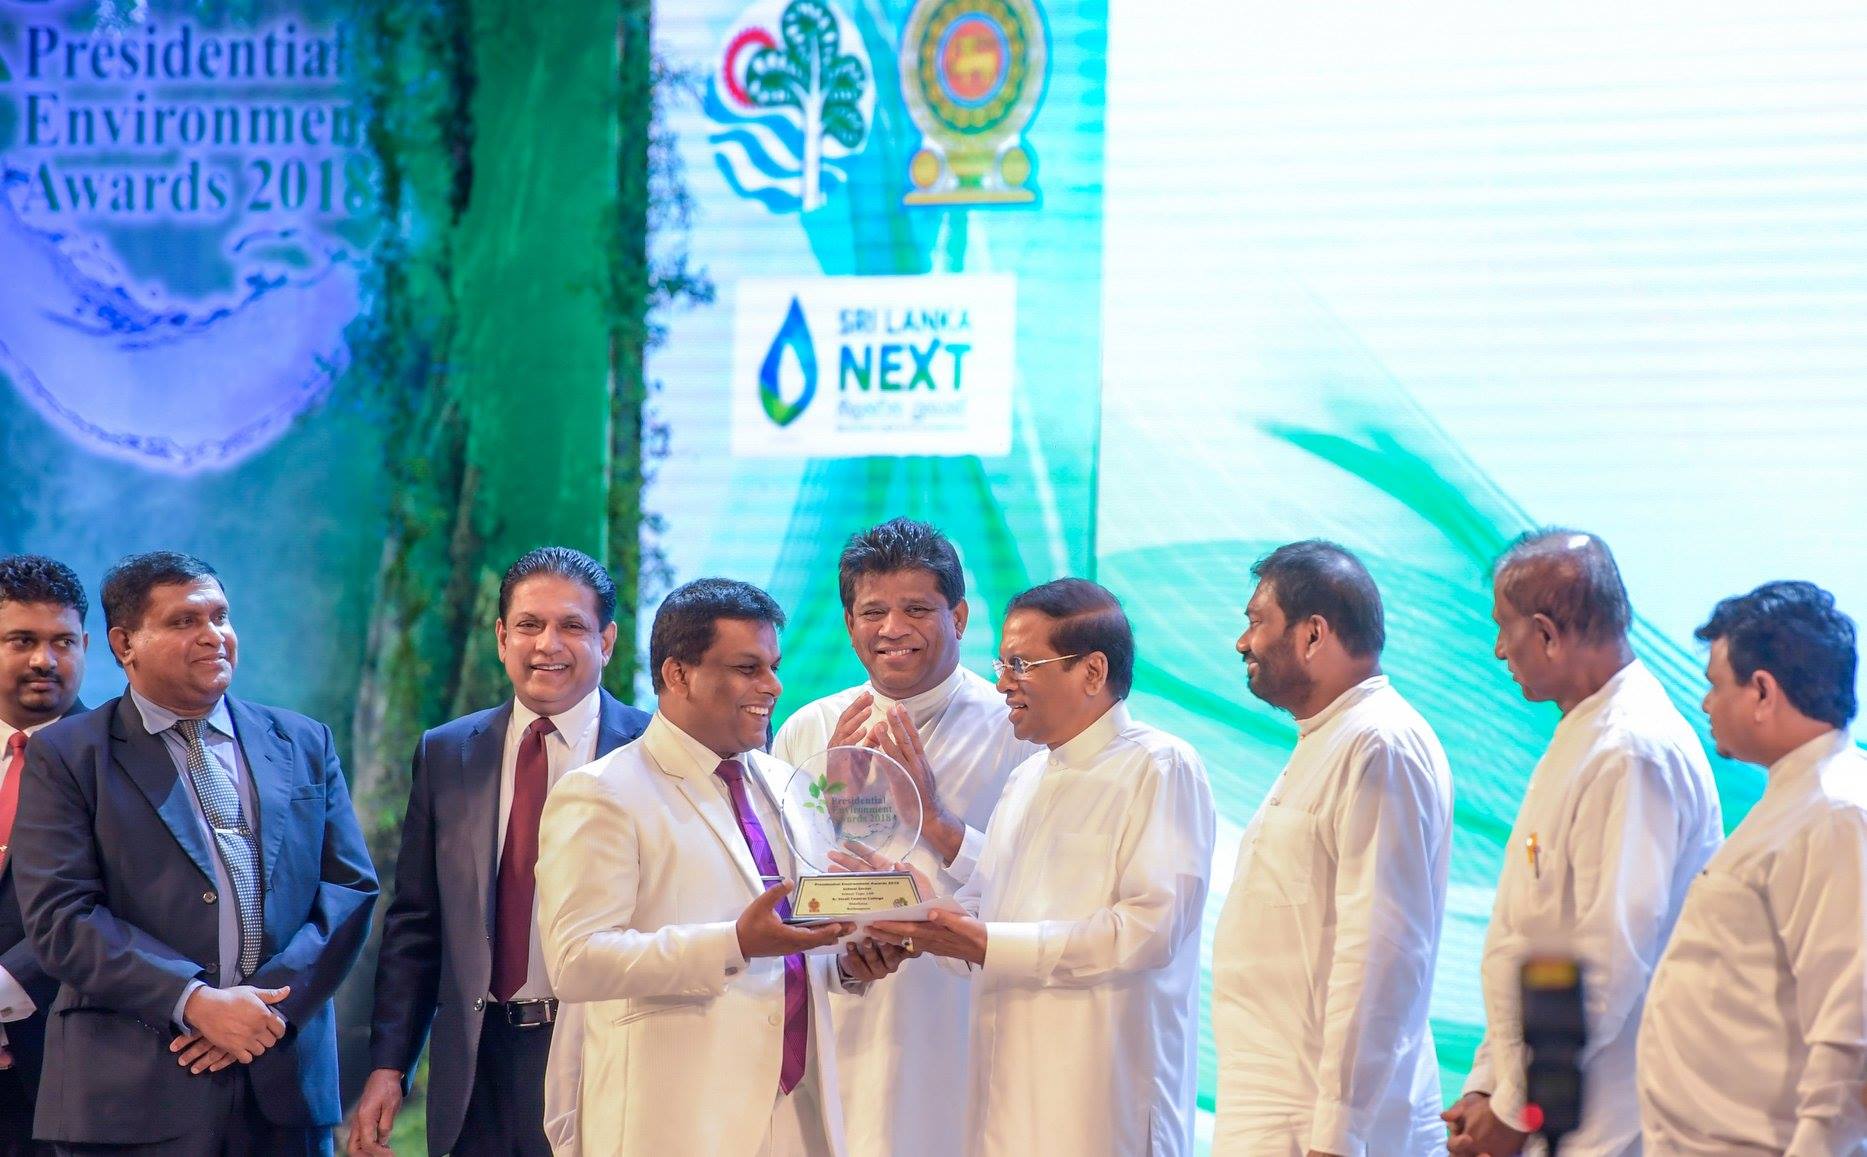 Presidential environment award